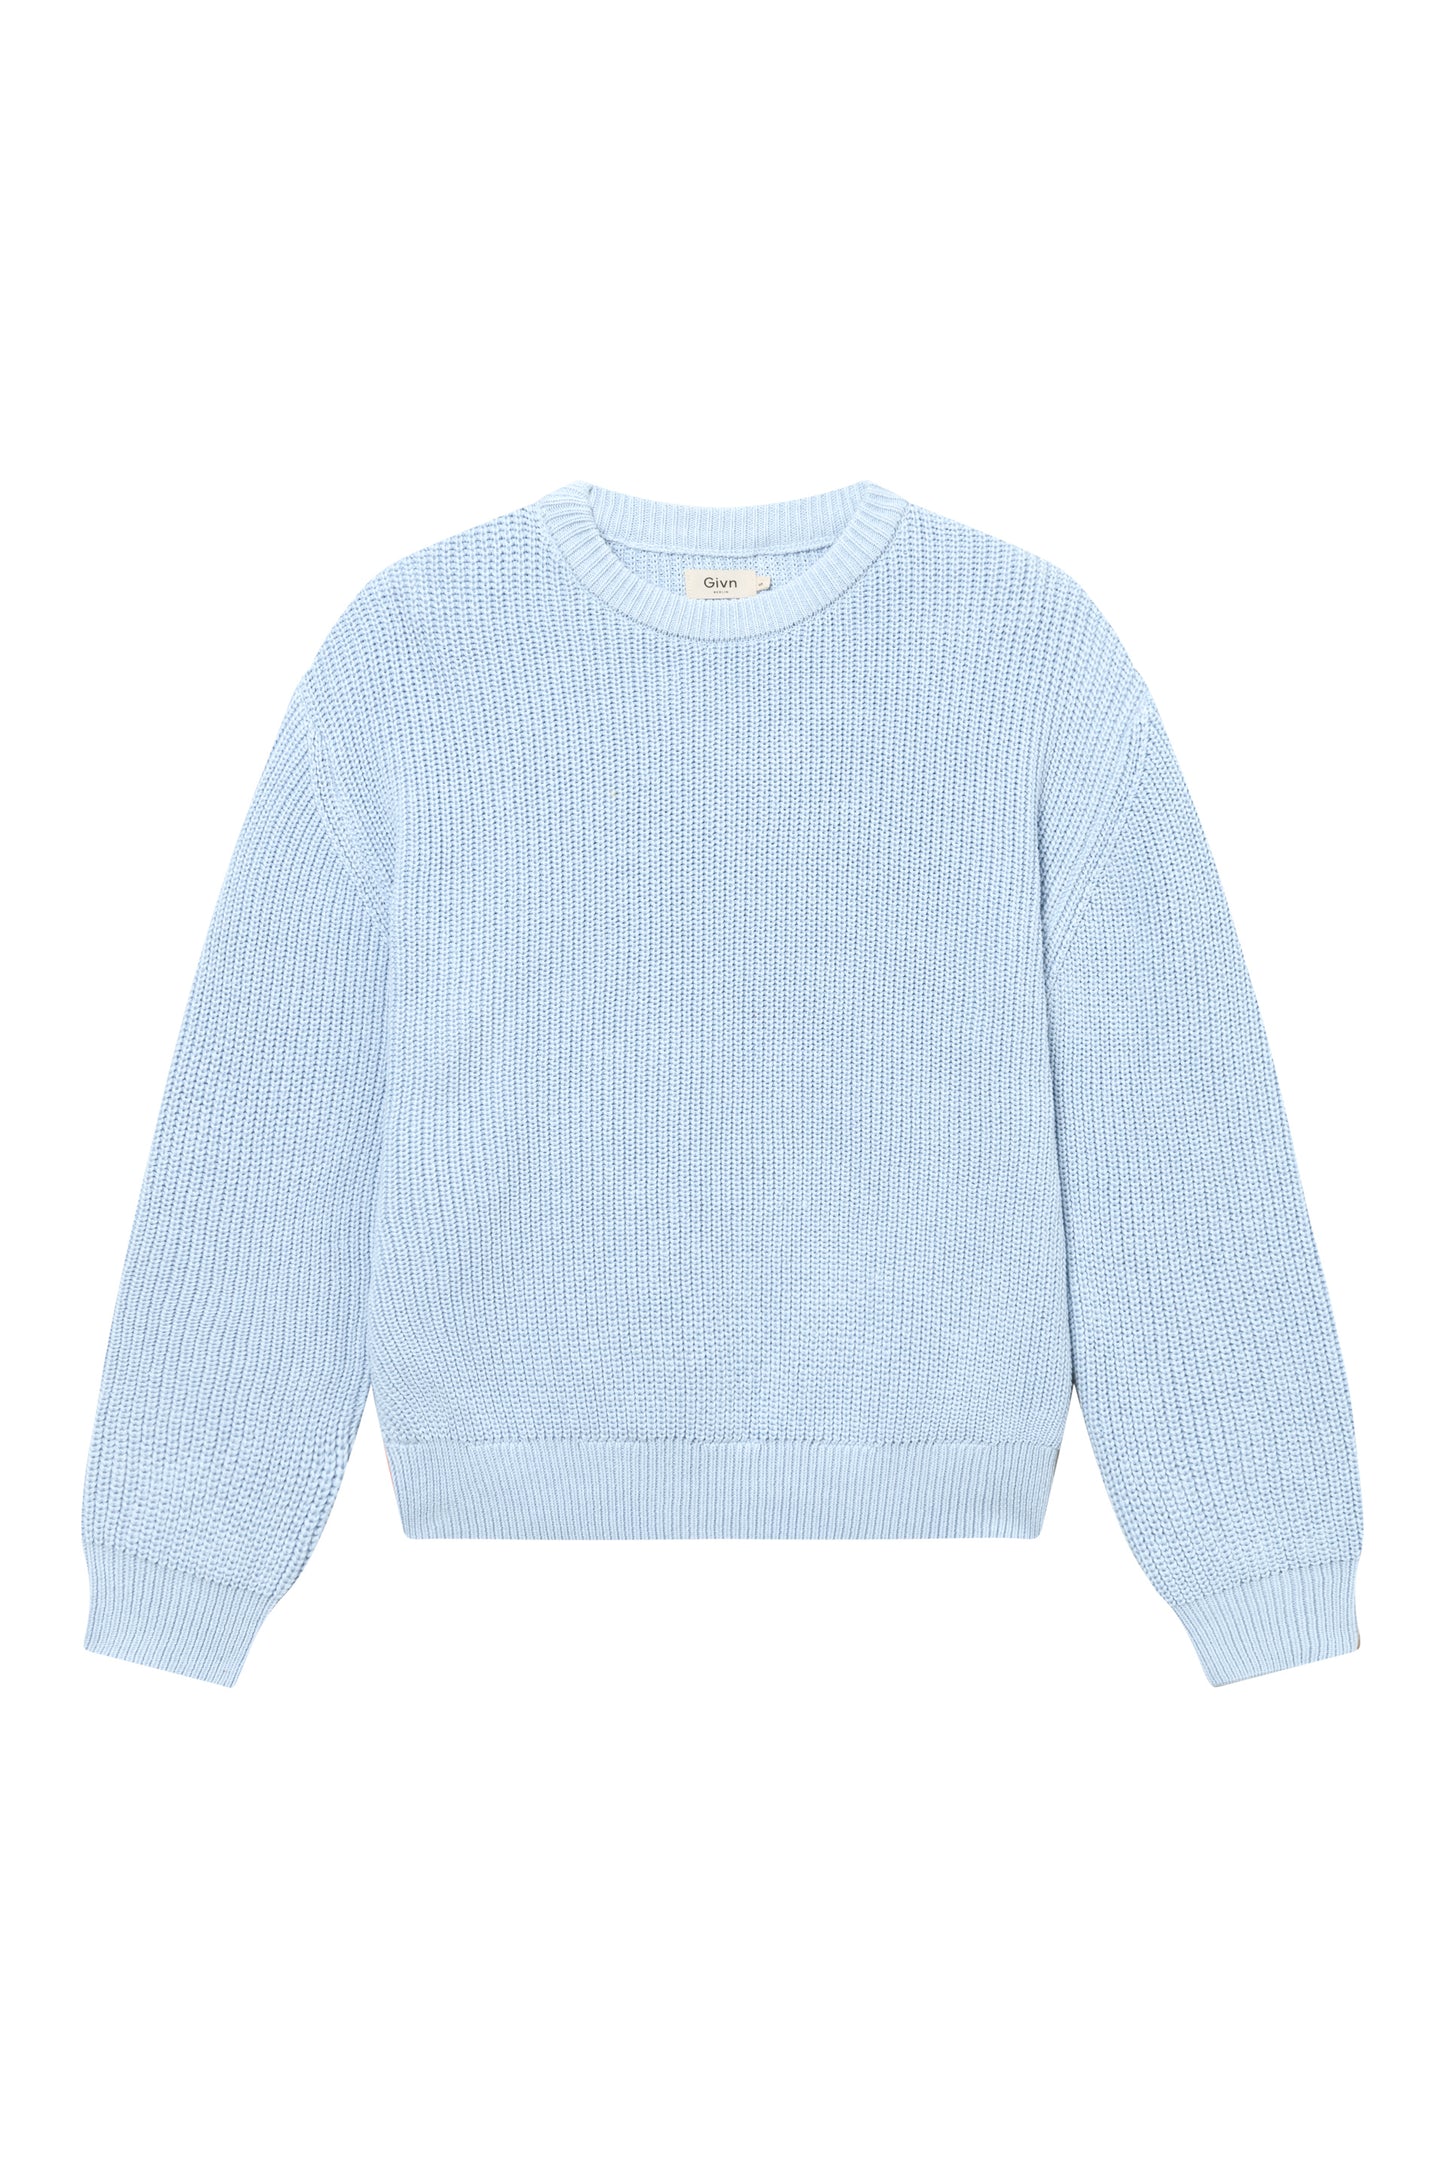 gbaria knit sweater, ice blue, damen - givn